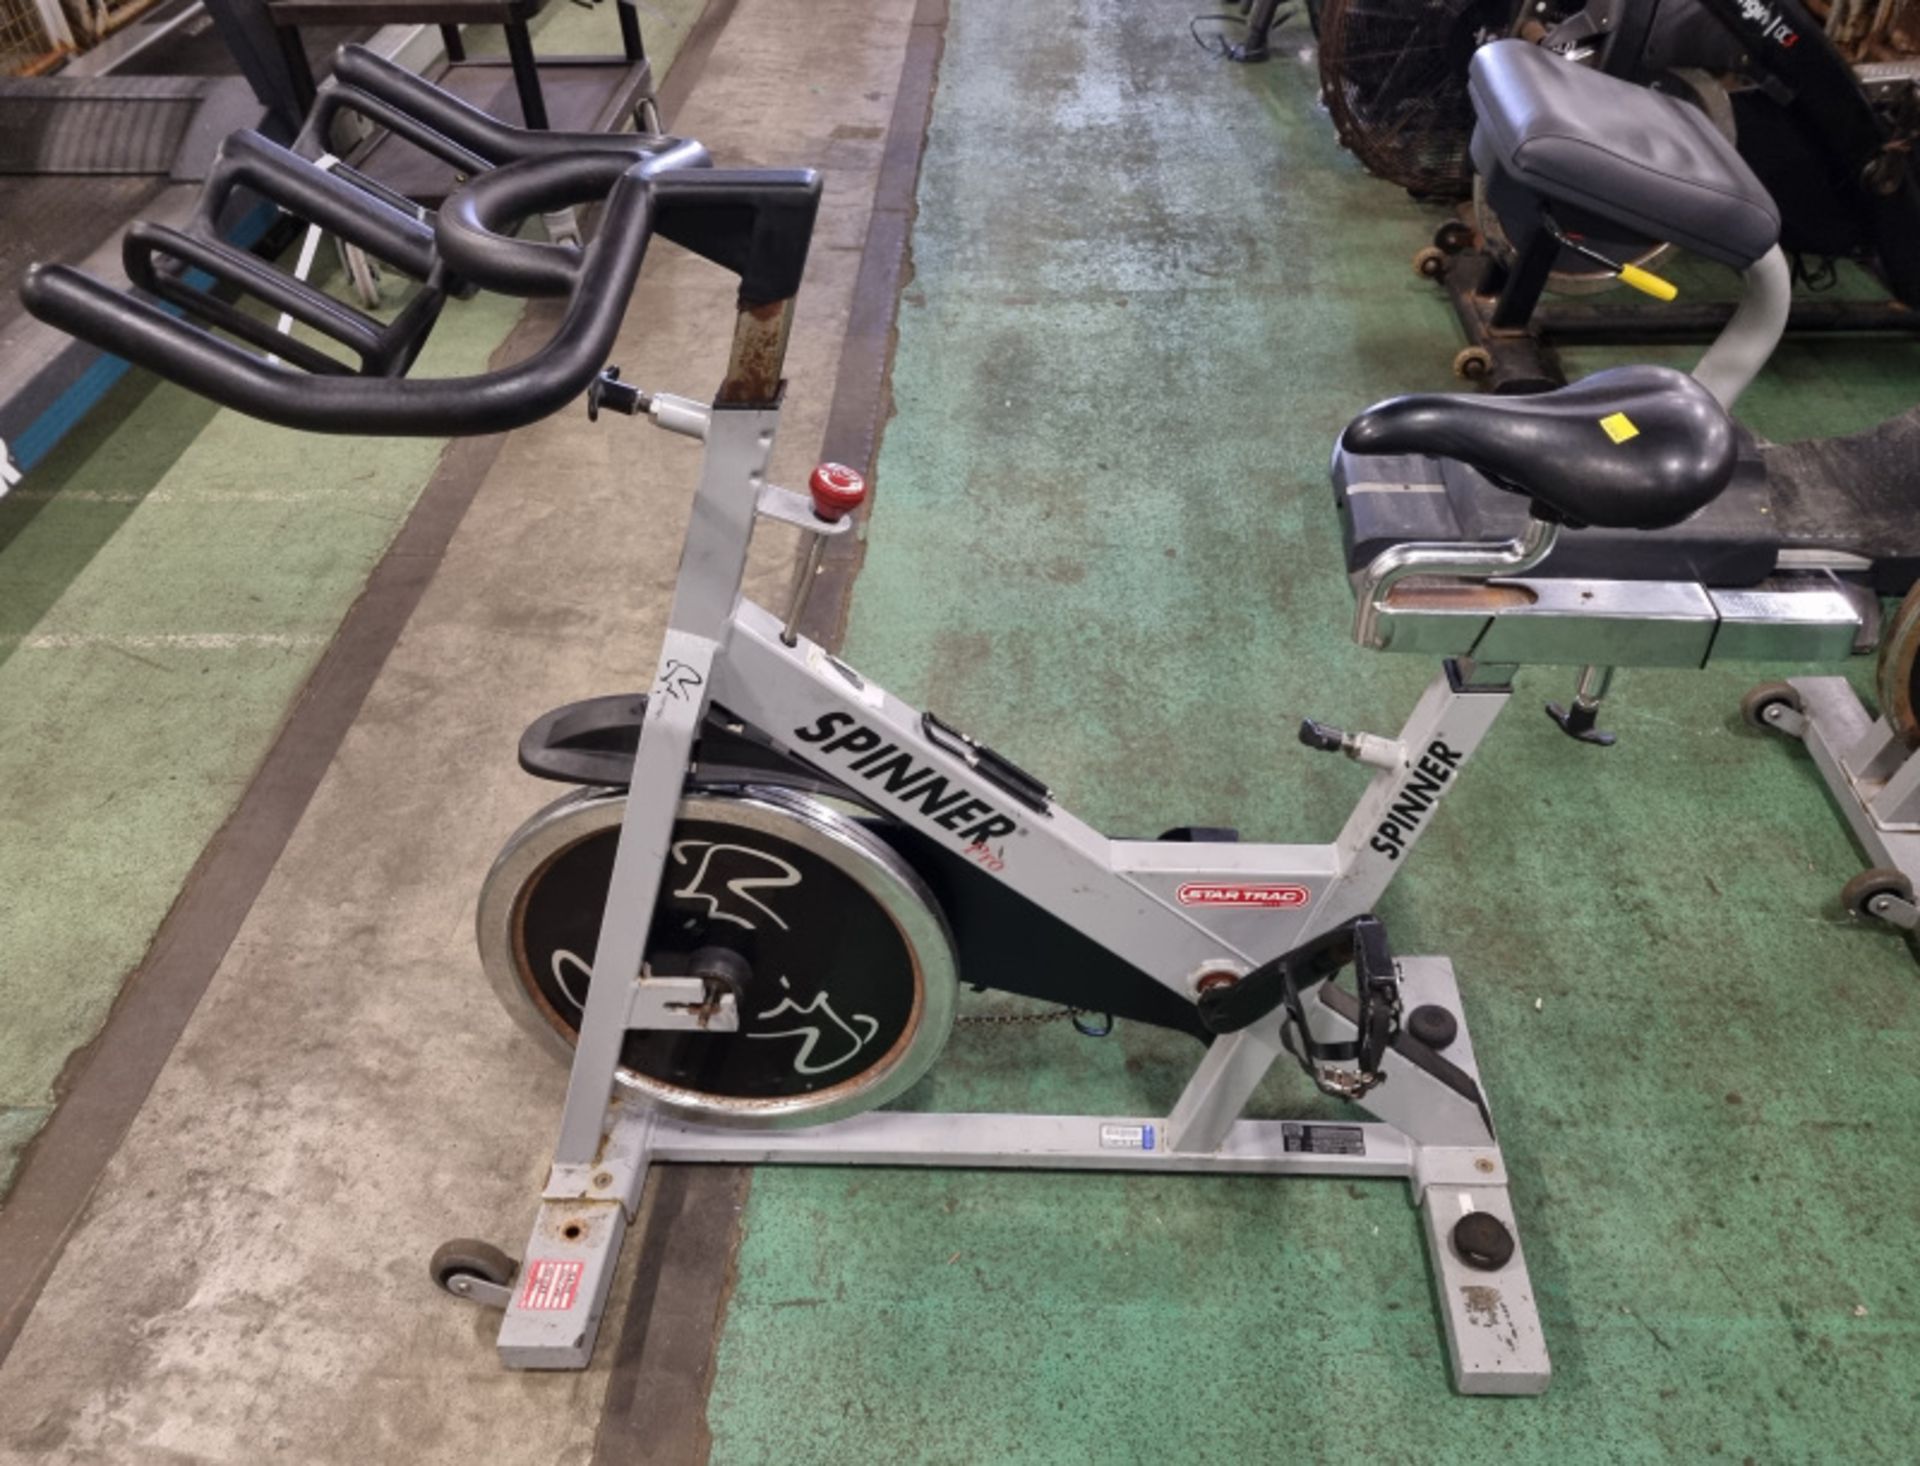 Star Trac spinner pro exercise bike - Image 4 of 7